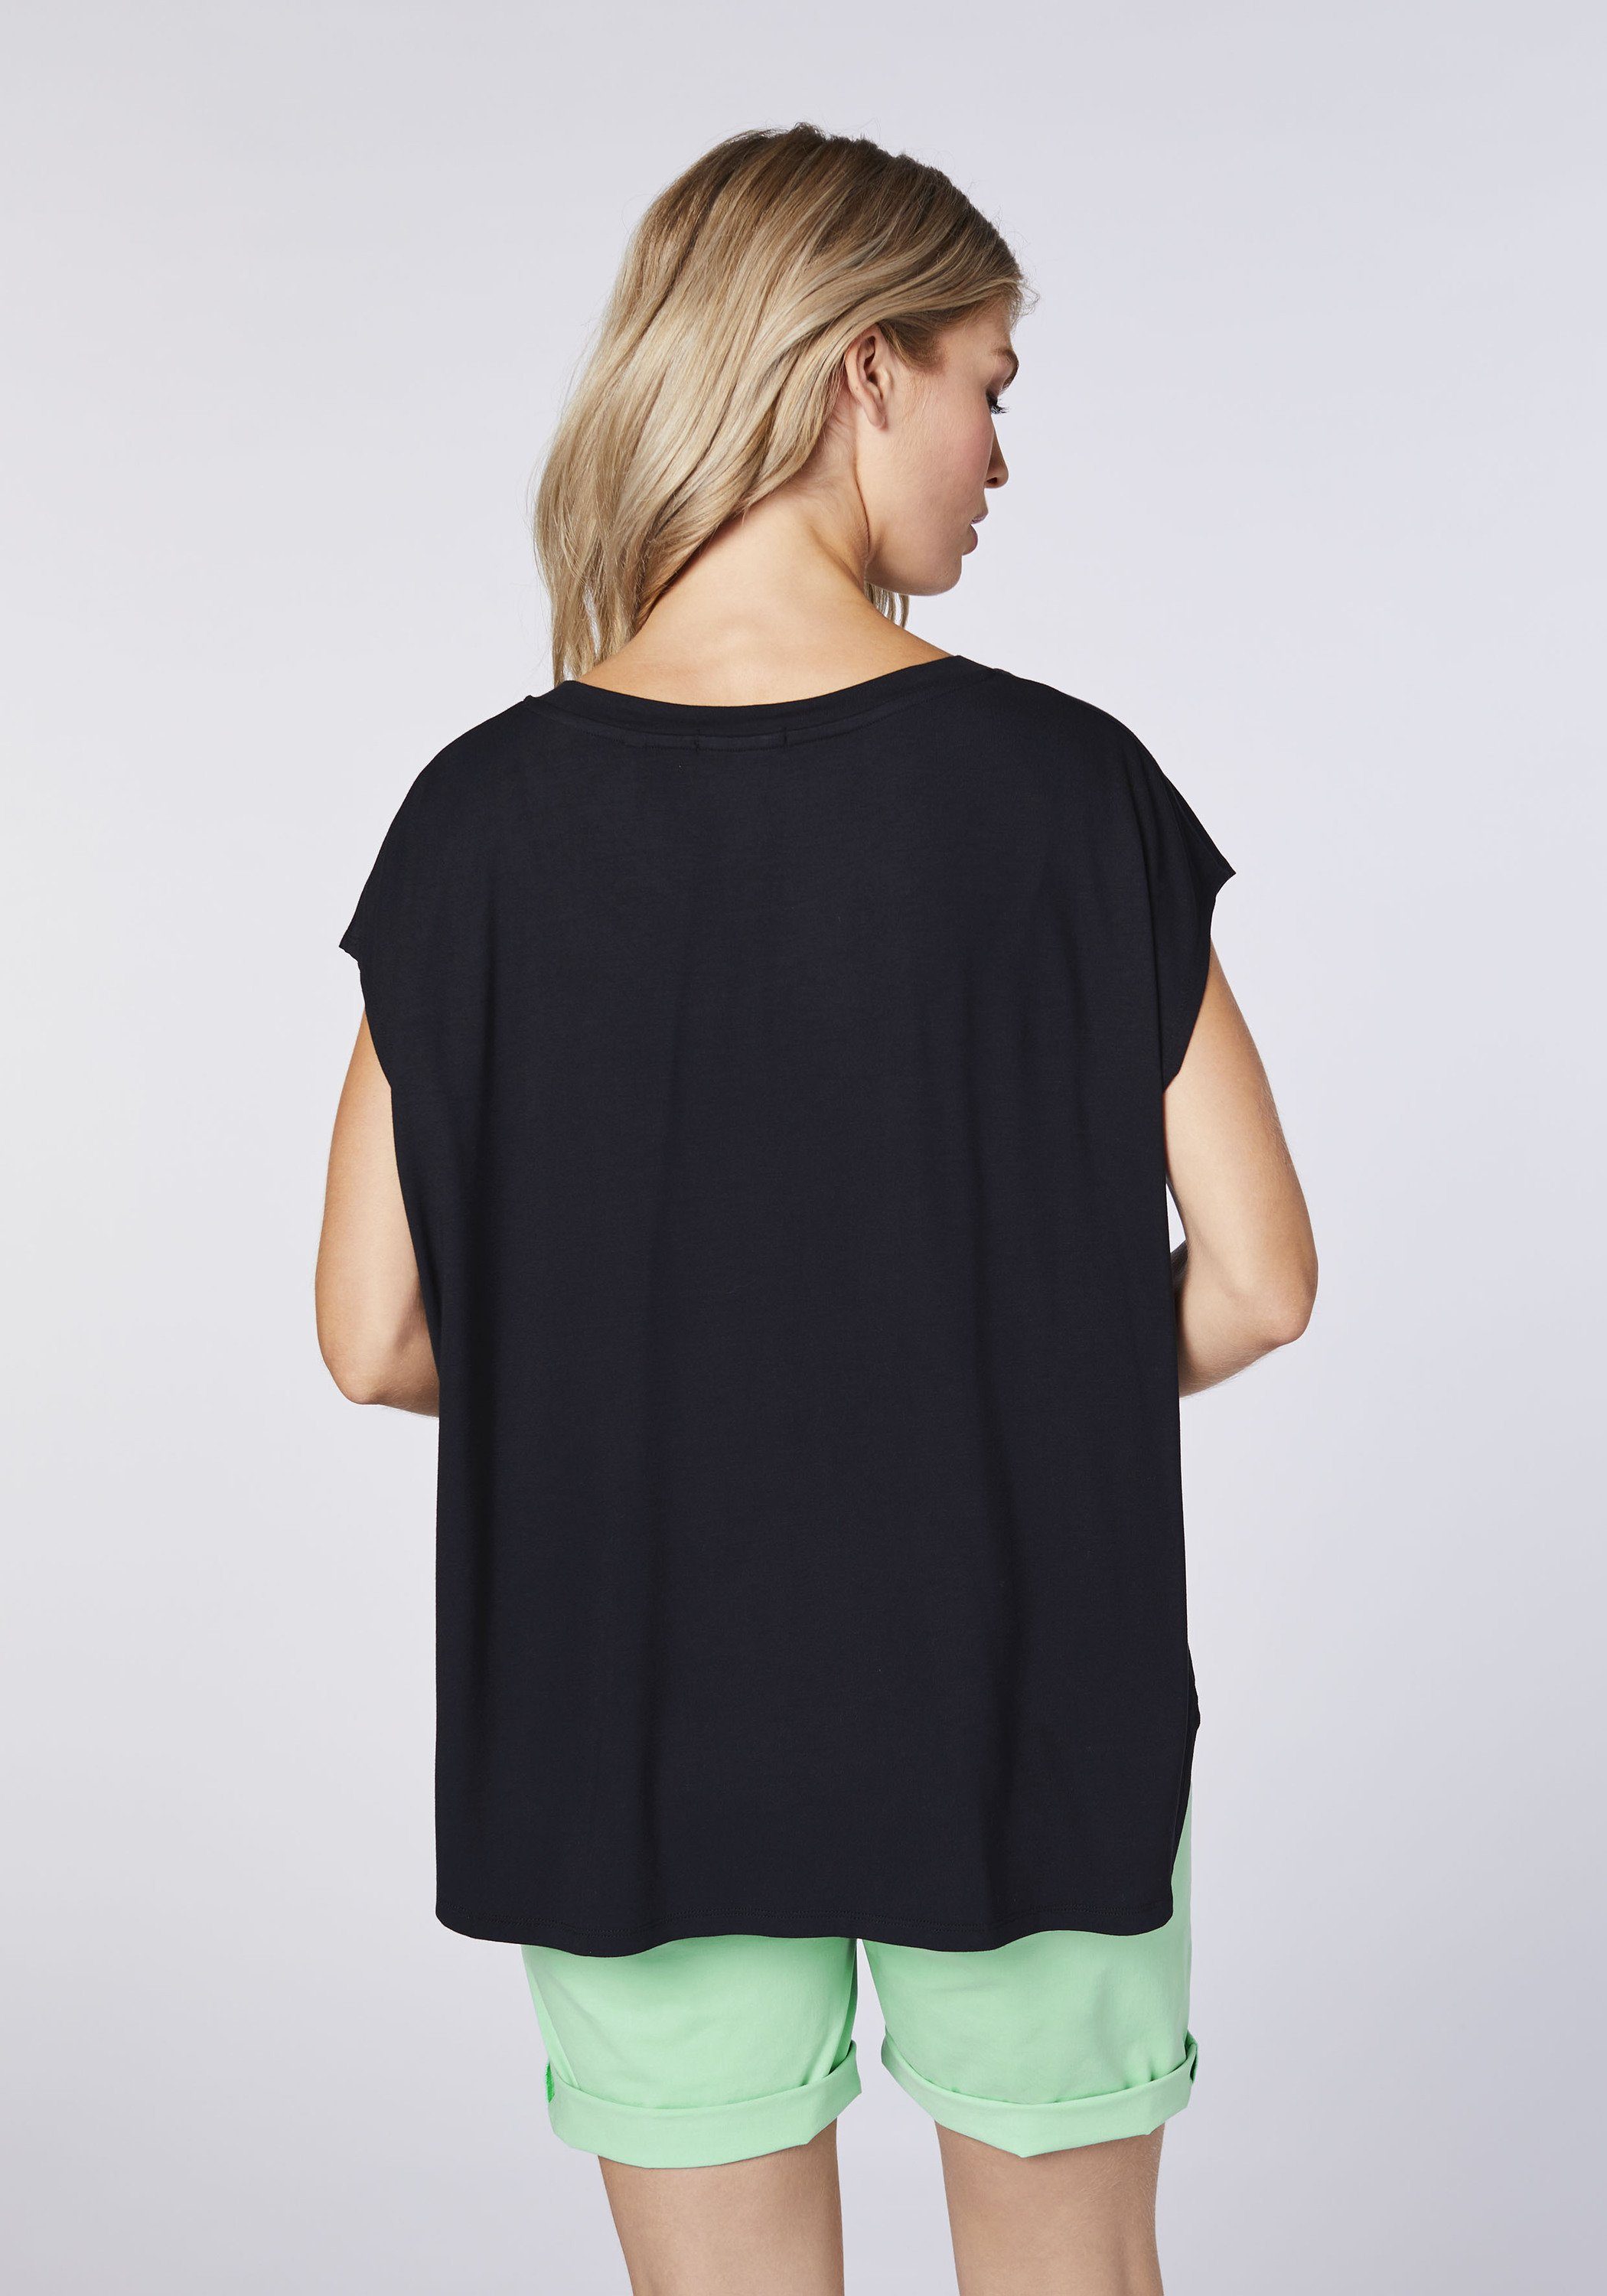 Viskose-Elasthanmix Chiemsee Black aus Deep mit Labelprint T-Shirt 1 Print-Shirt